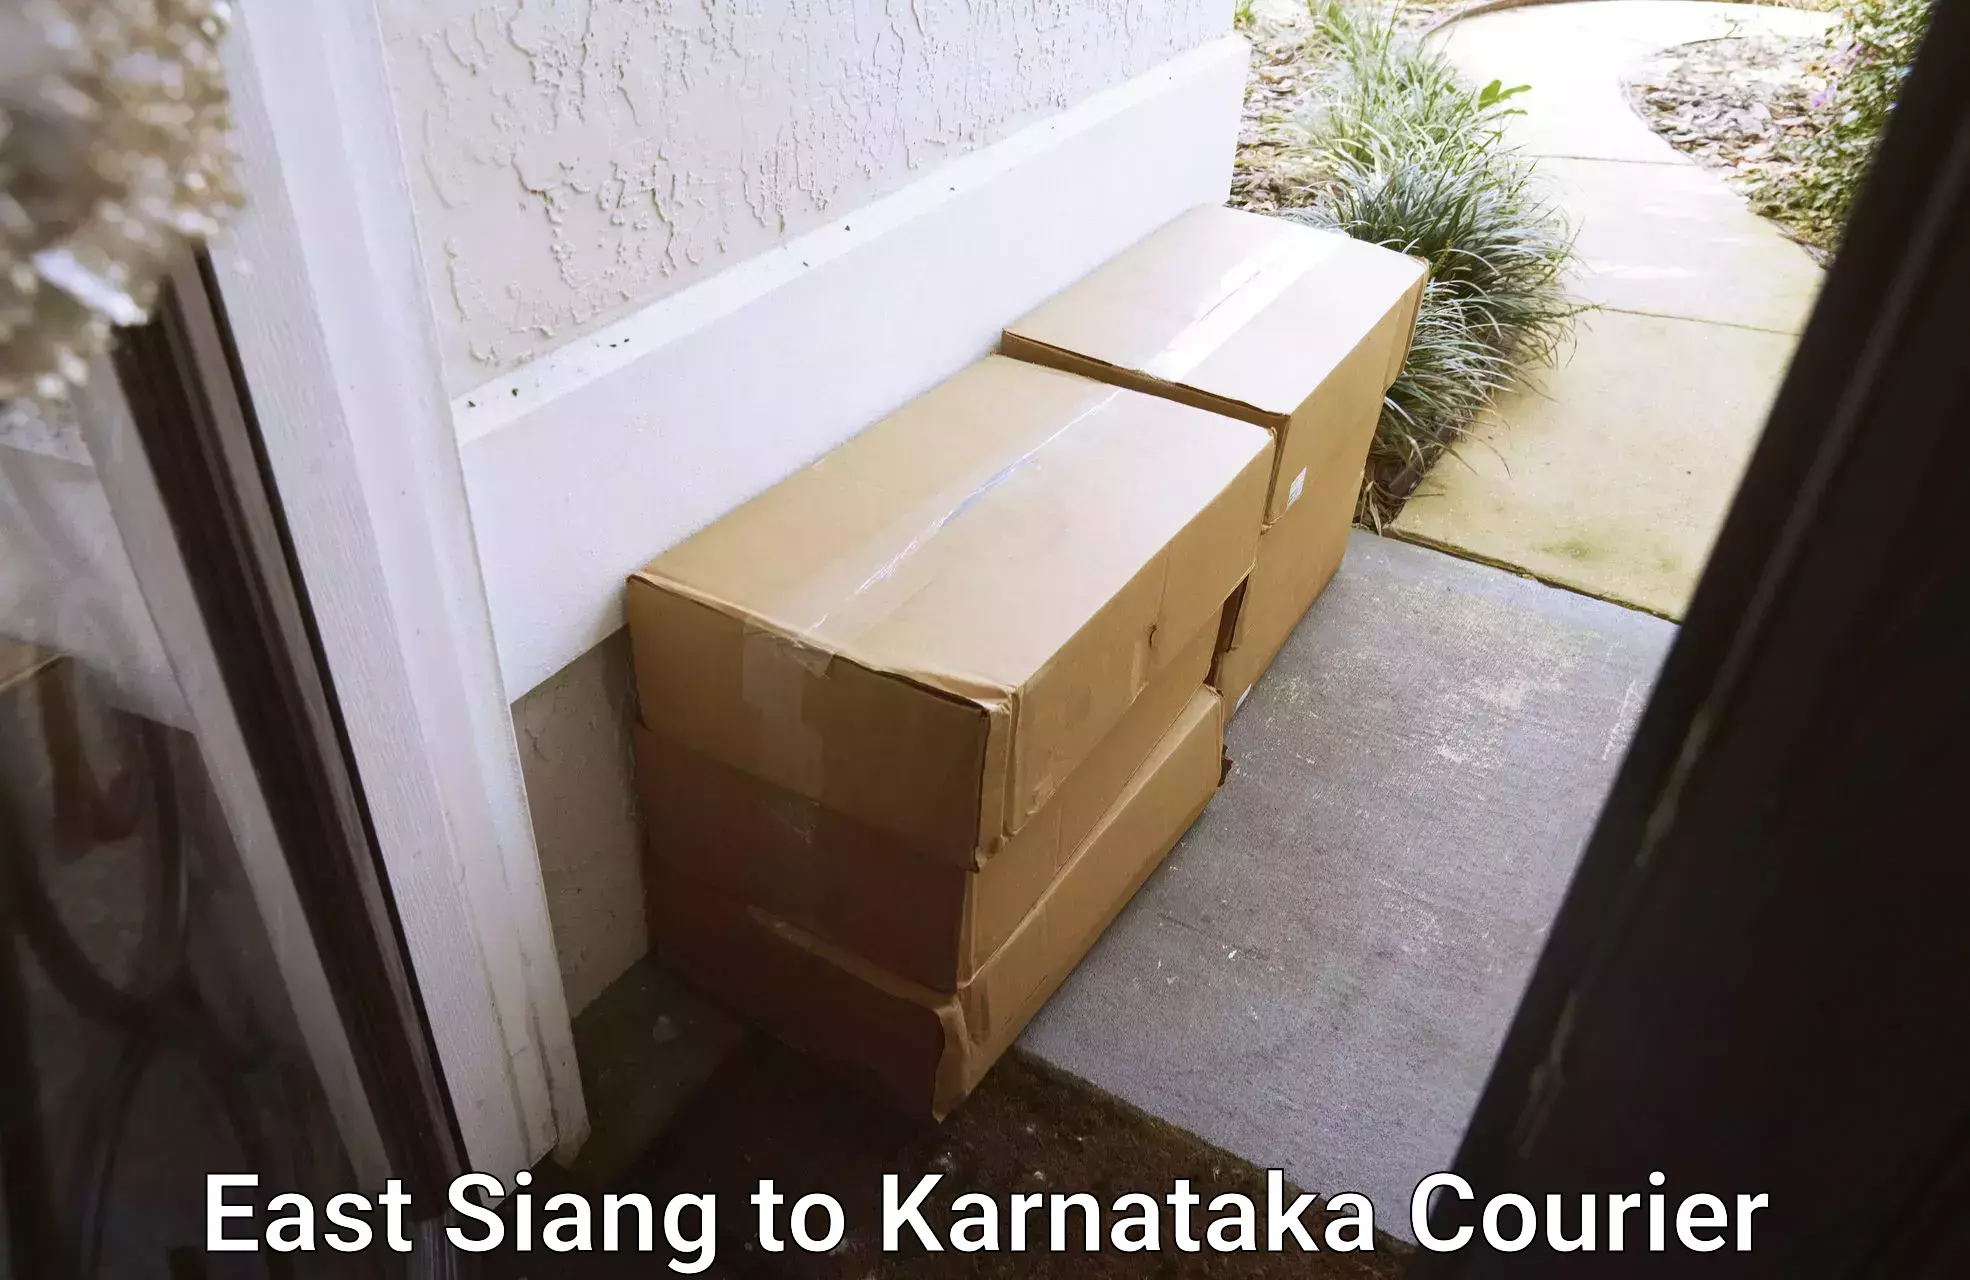 Same-day delivery solutions East Siang to Karnataka